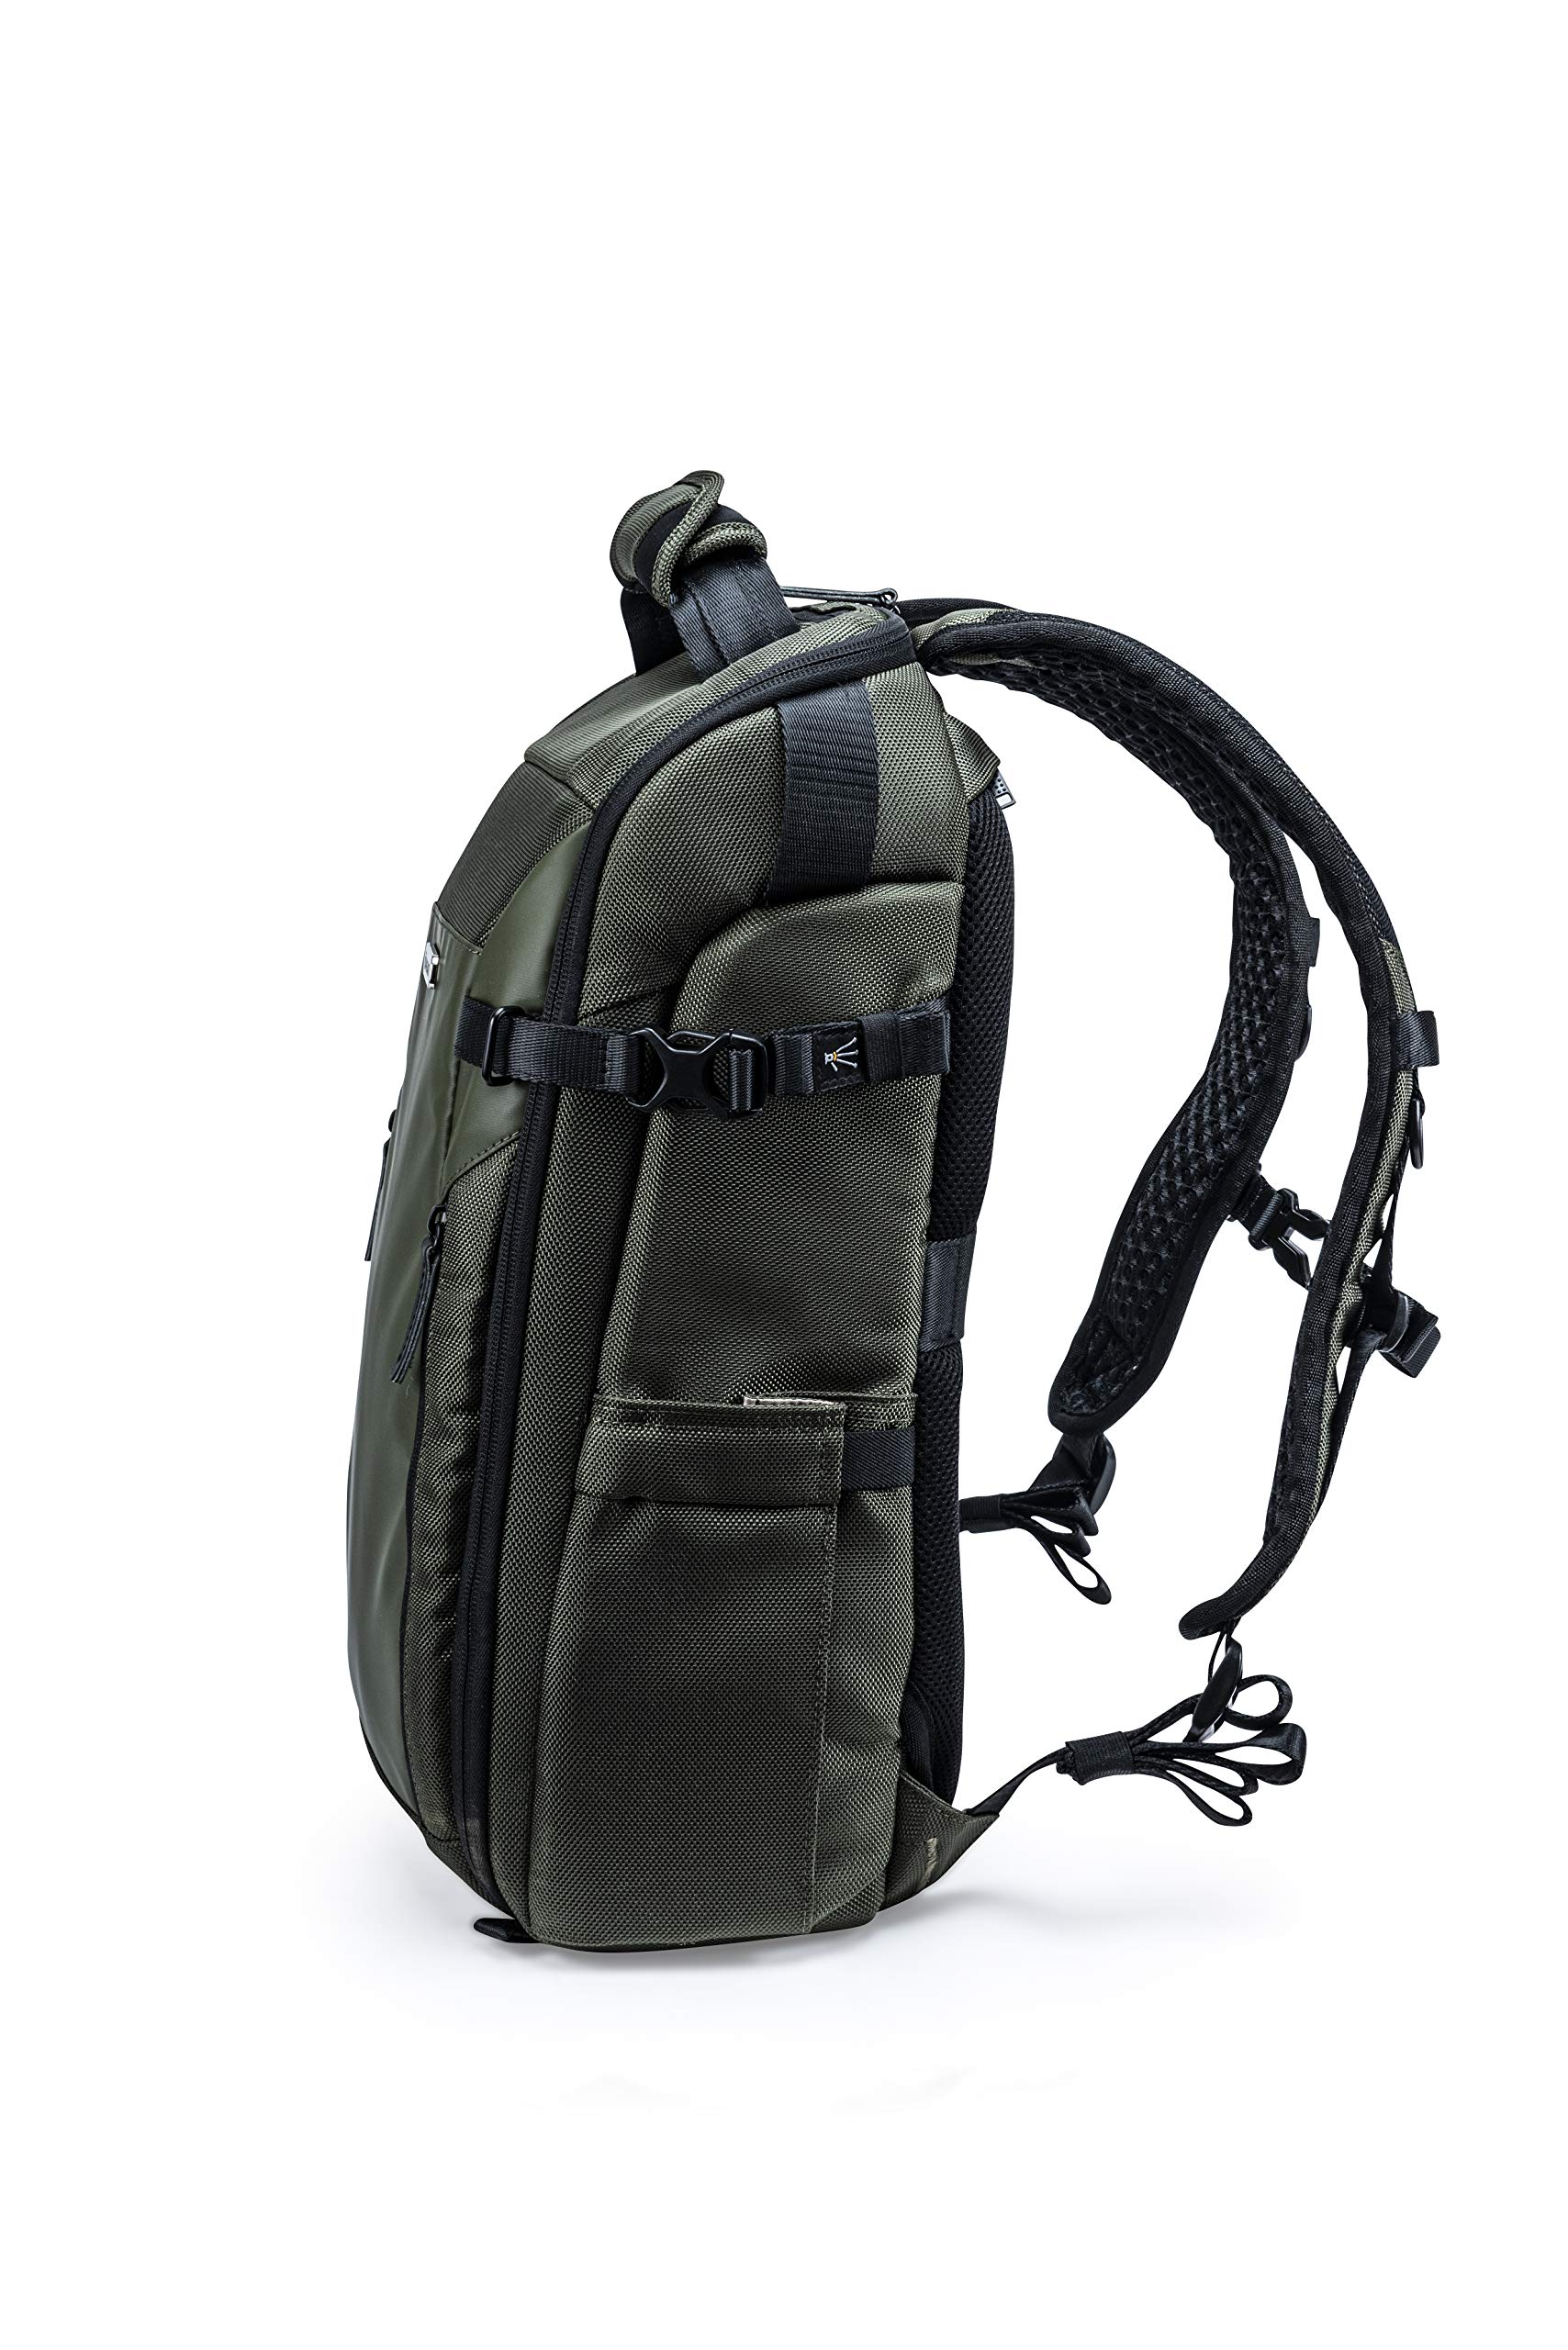 Vanguard VEO Select 45BFM Camera Backpack, Green